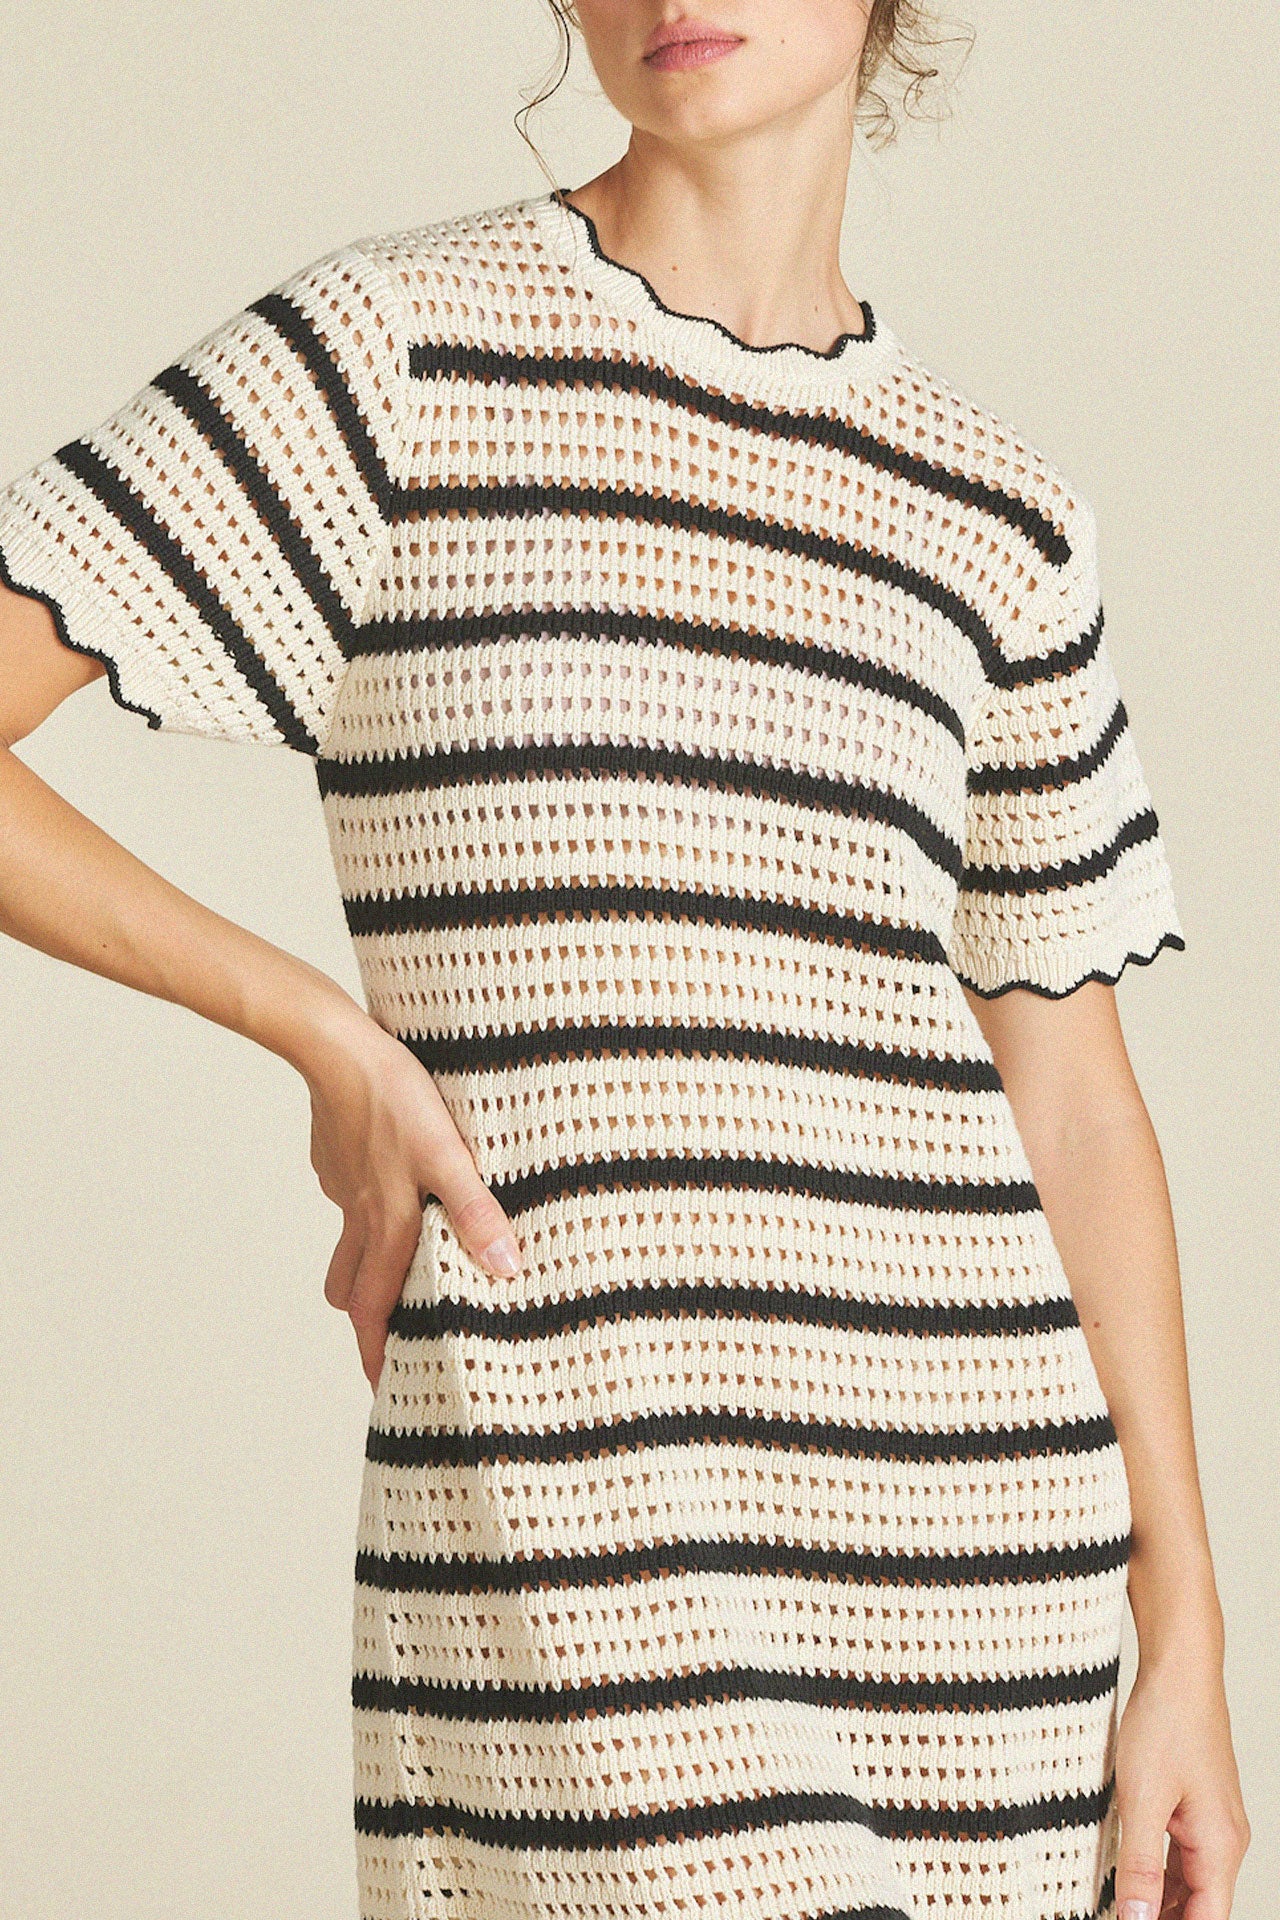 Mer Knit Dress Antique White/Black Stripe